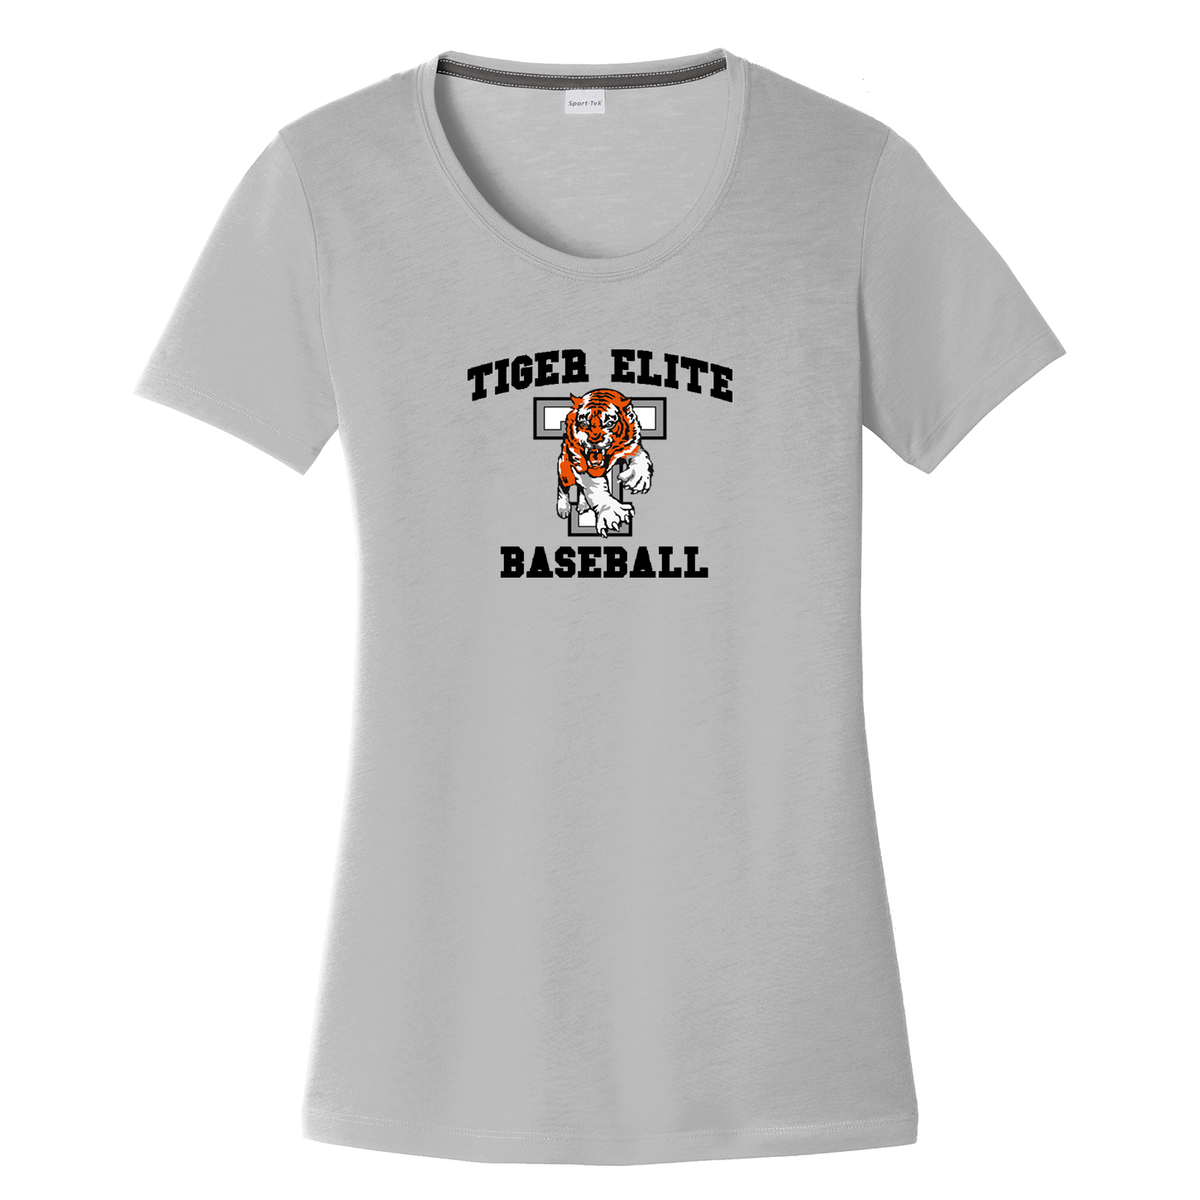 Tiger Elite Baseball Women's CottonTouch Performance T-Shirt